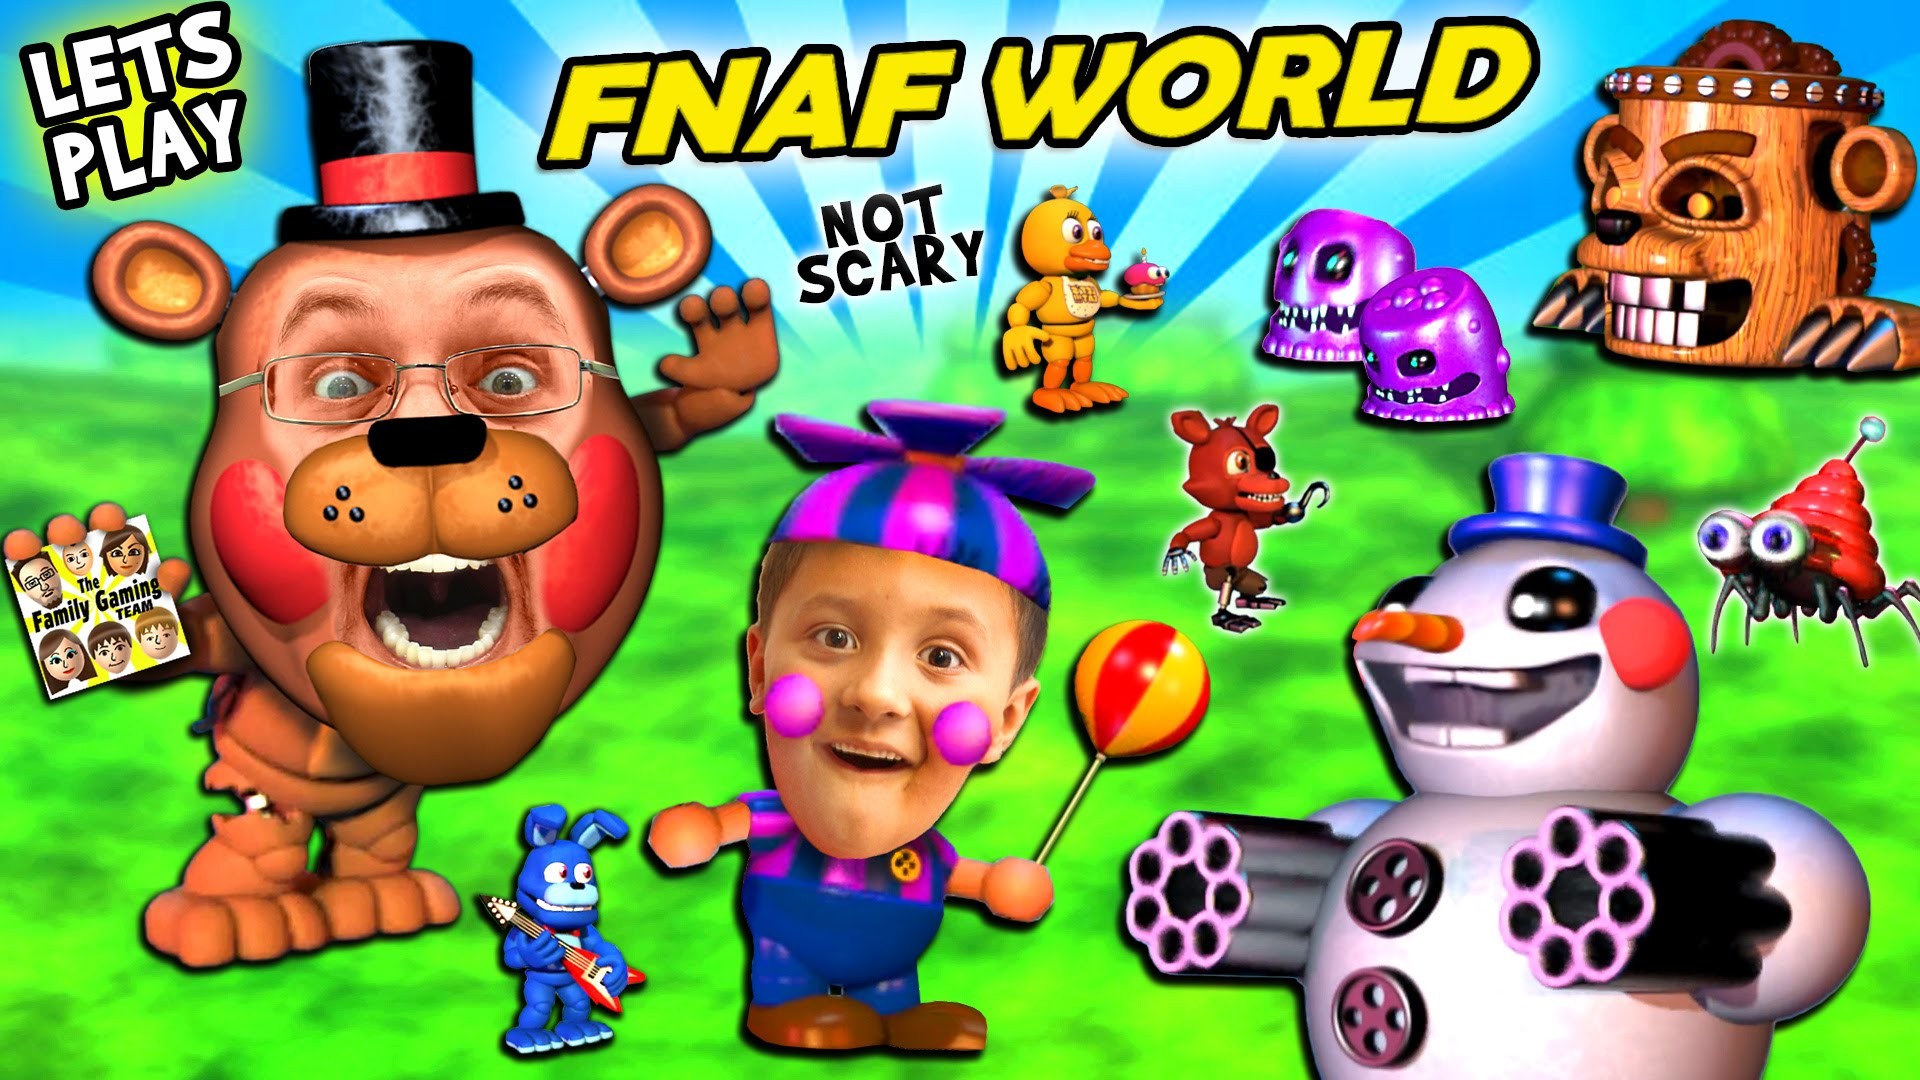 1920x1080 FNAF WORLD = CUTE and SQUISHY! FGTEEV Duddy & Mike Play a Cuddly RPG  Animatronics Not-Scary Game - YouTube